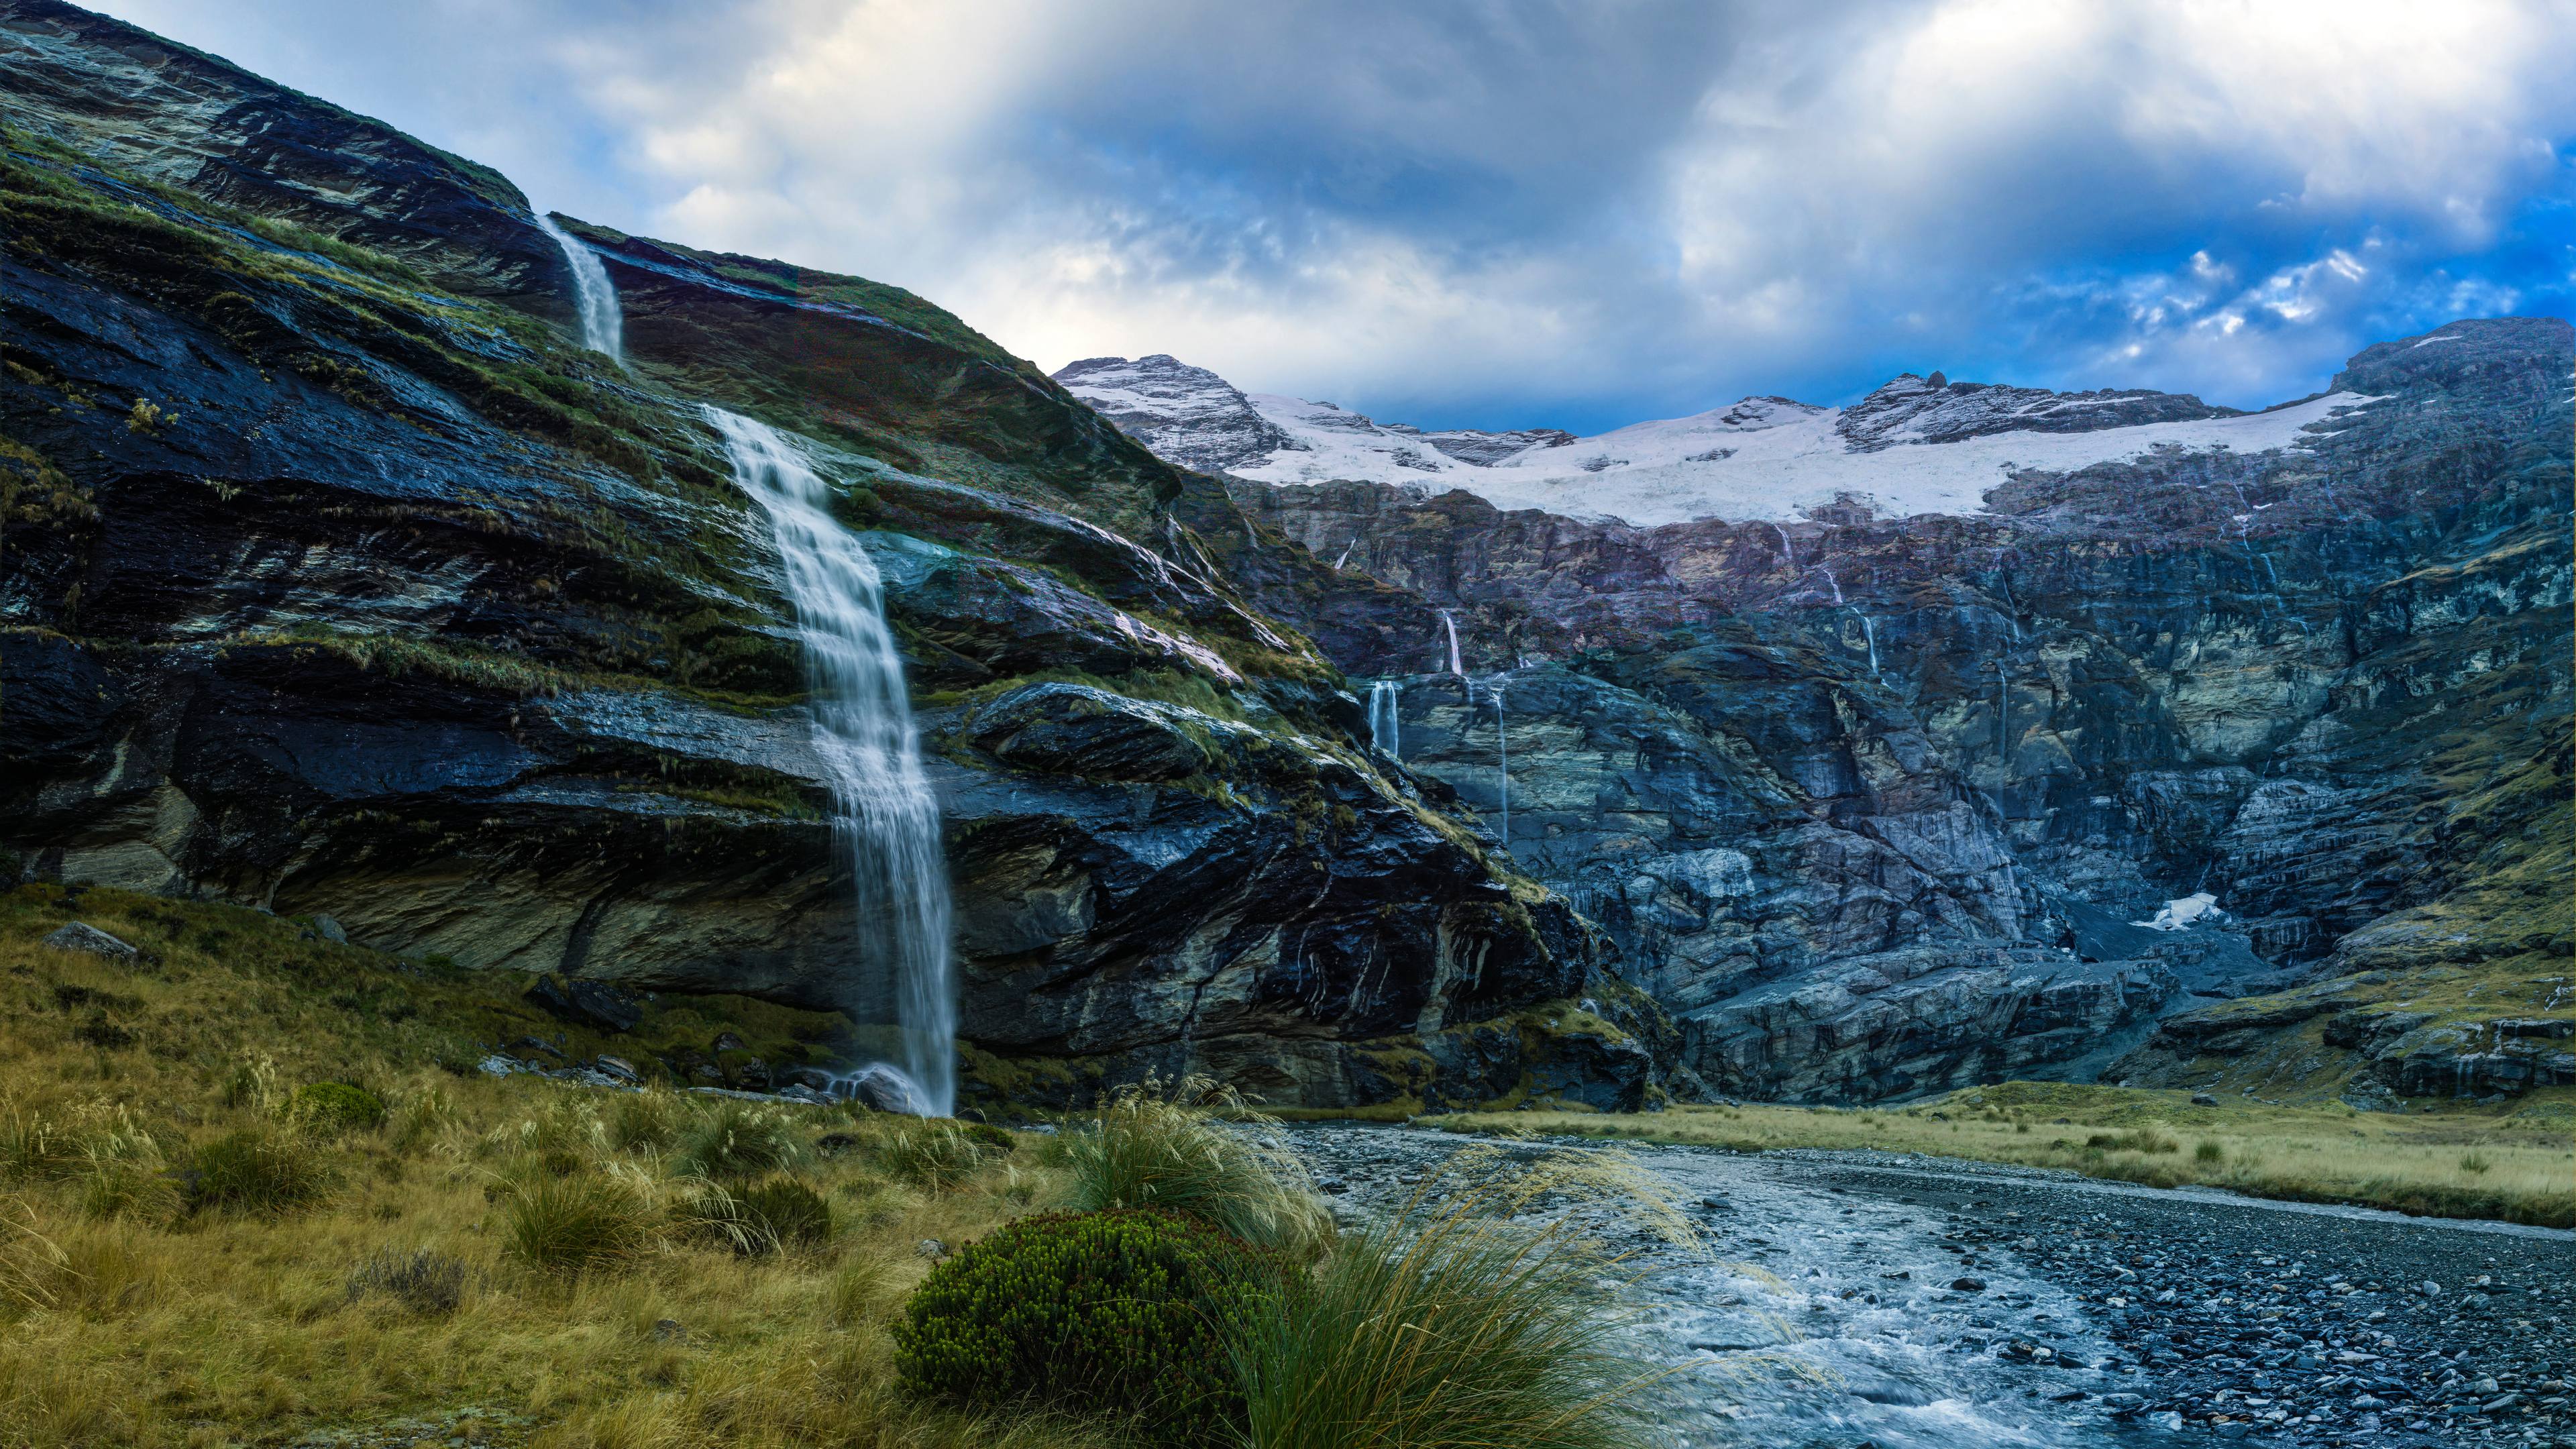 General 3840x2160 landscape 4K waterfall rocks mountains snow New Zealand Queenstown nature